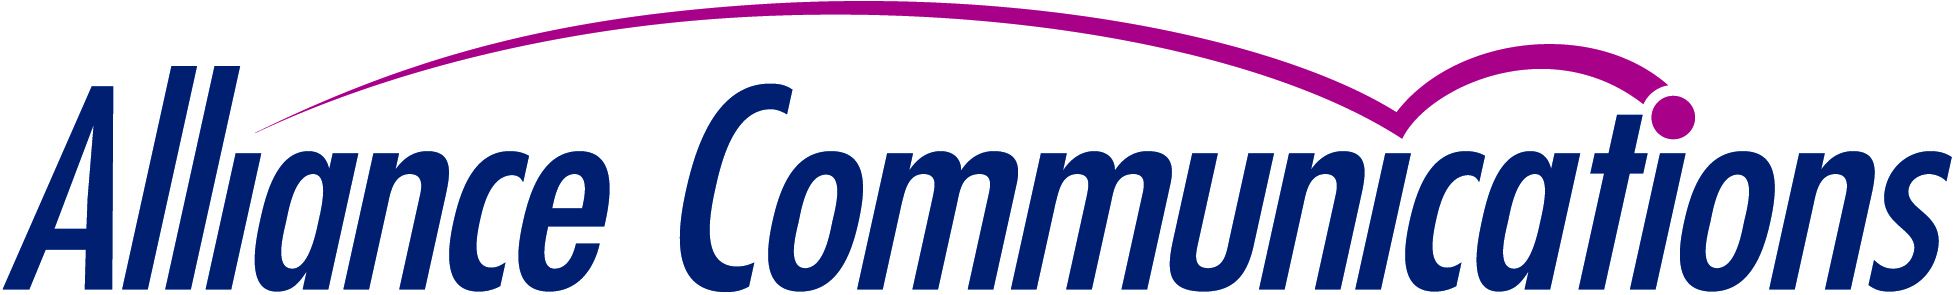 alliance-marcom Logo